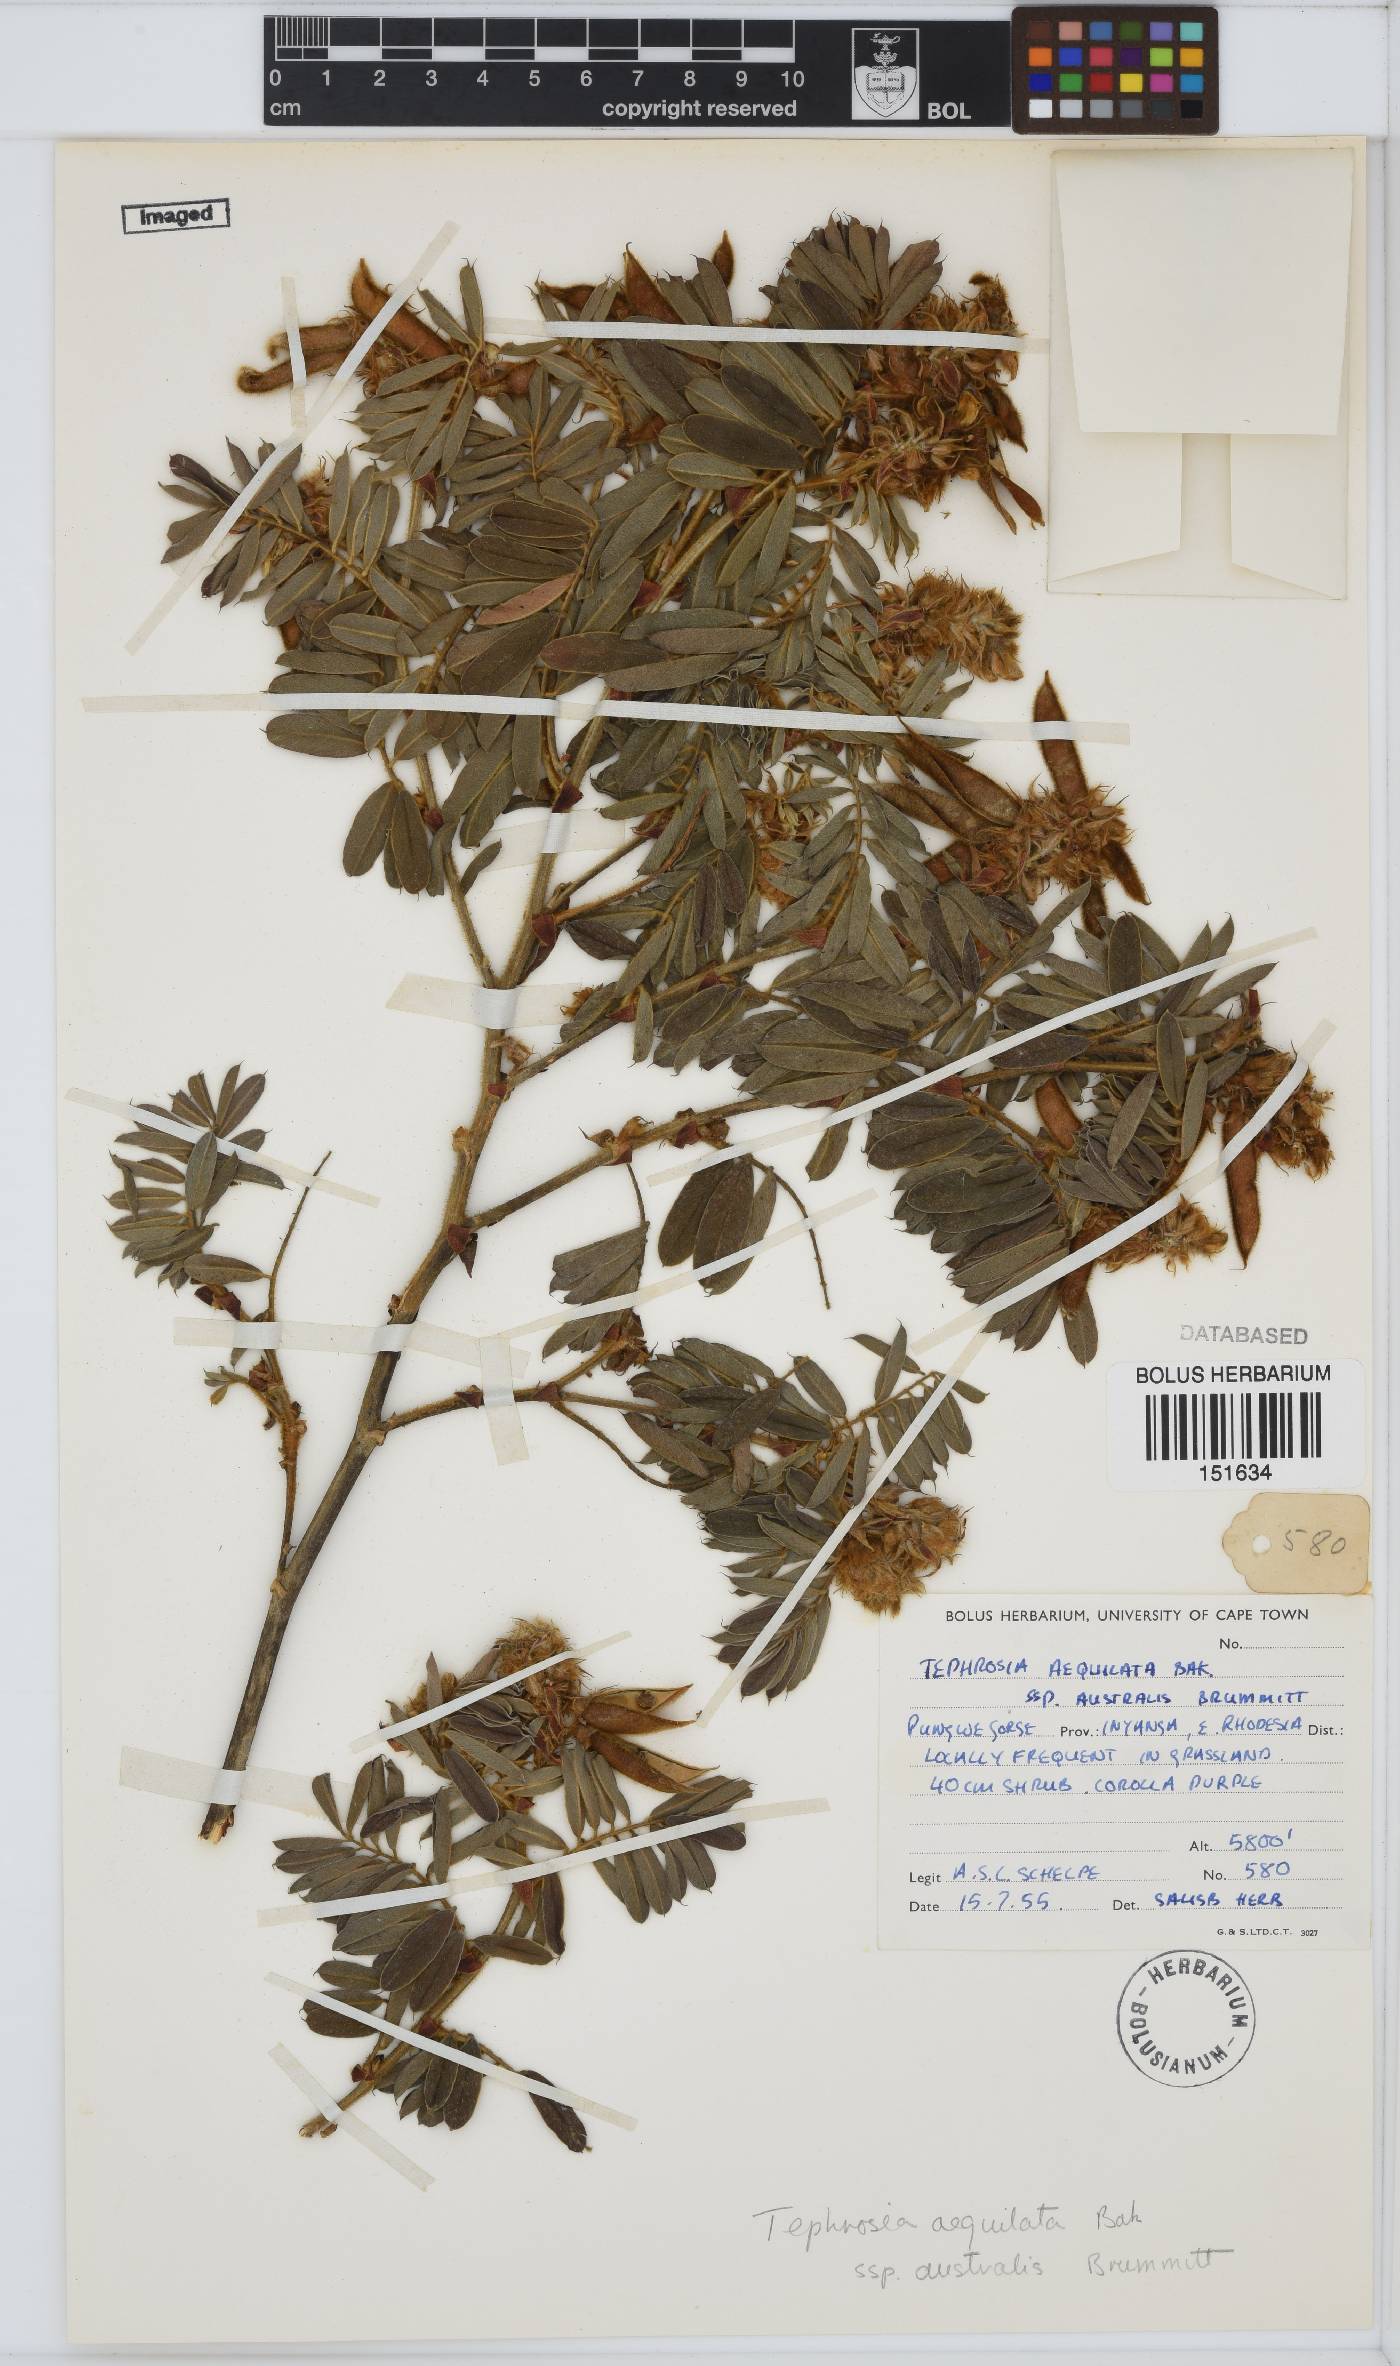 Tephrosia aequalata subsp. australis image